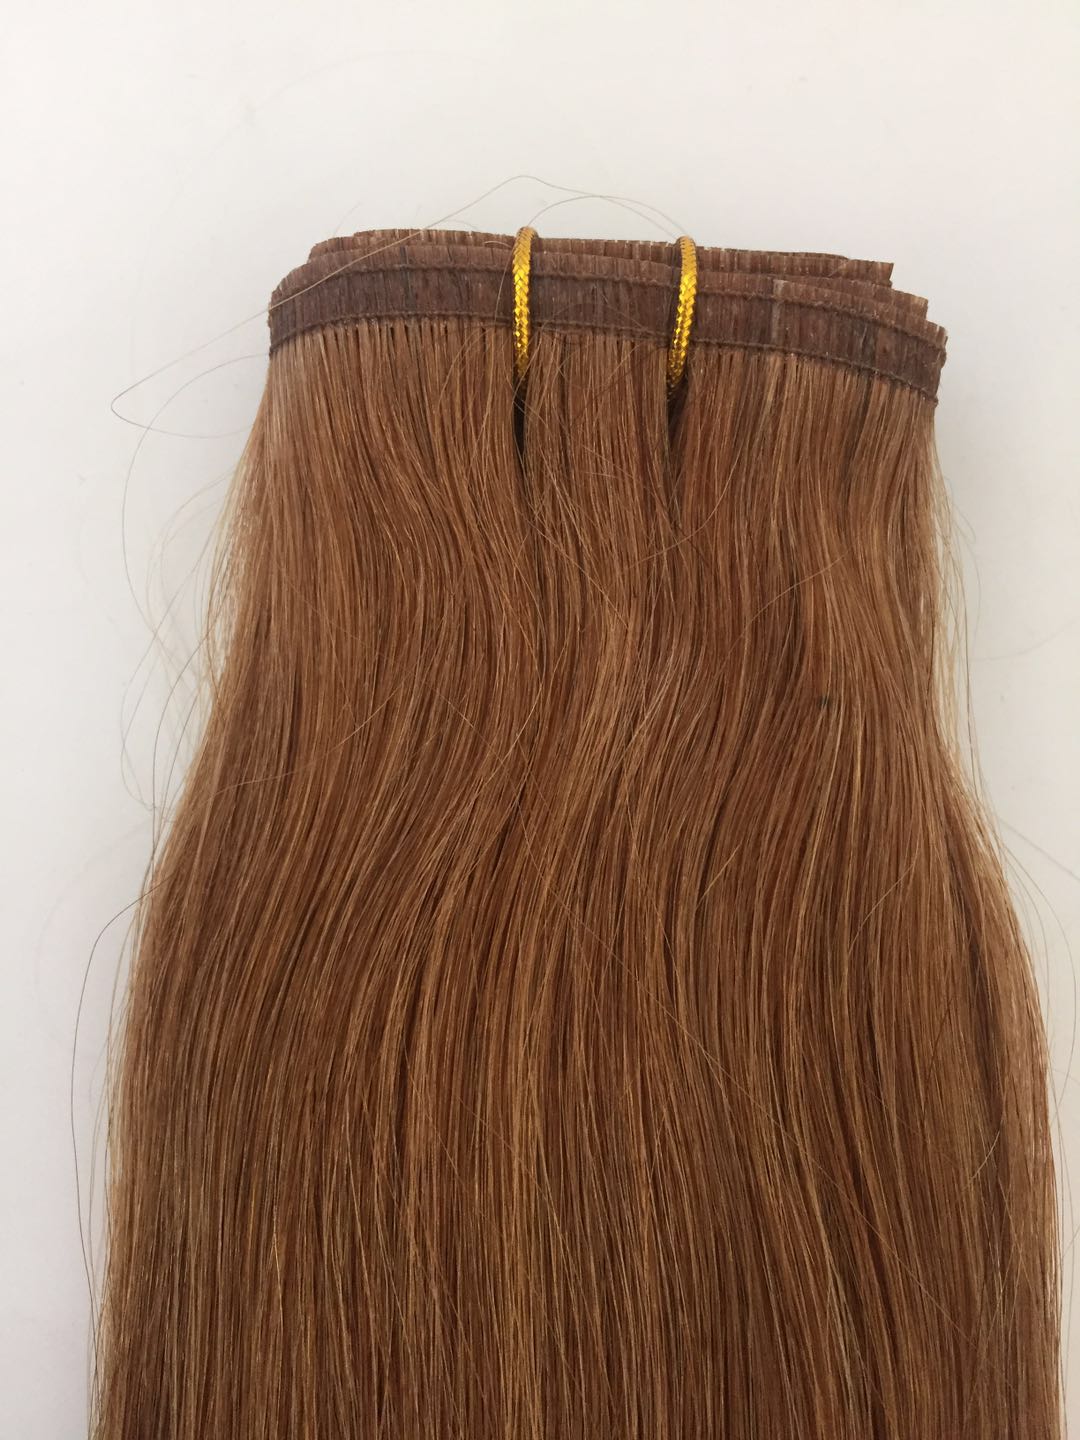 China thin seamless 100 human hair extensions factory QM210